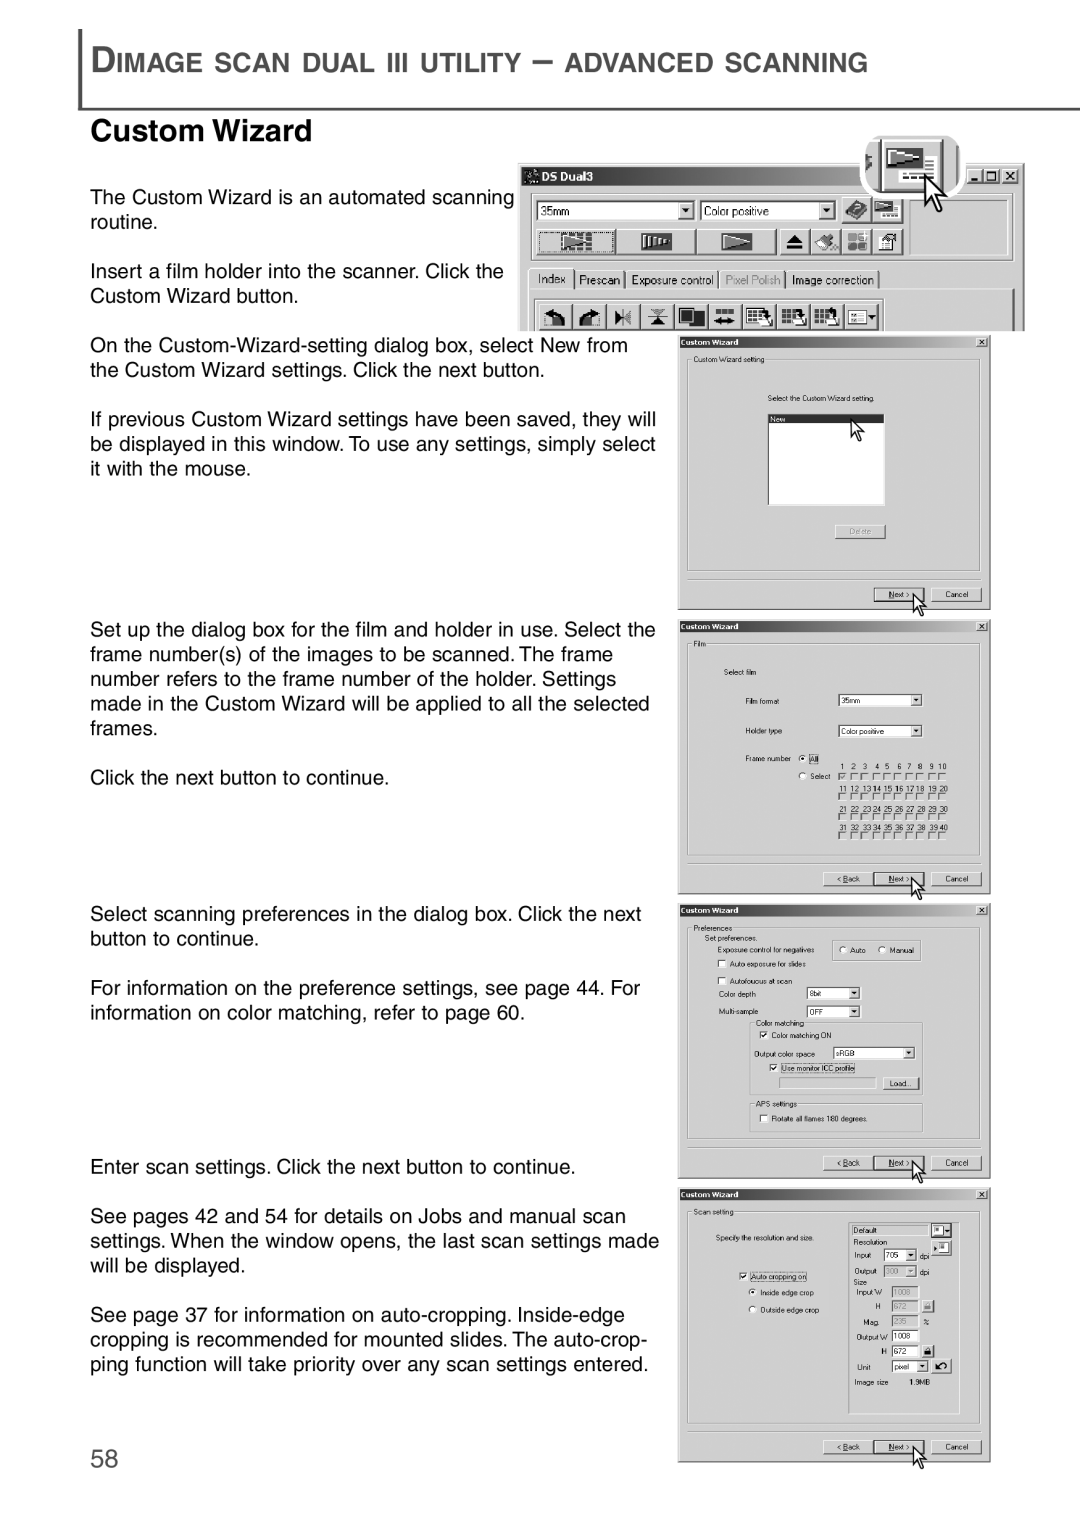 Konica Minolta AF-2840 instruction manual Custom Wizard, Dimage Scan Dual Iii Utility - Advanced Scanning 